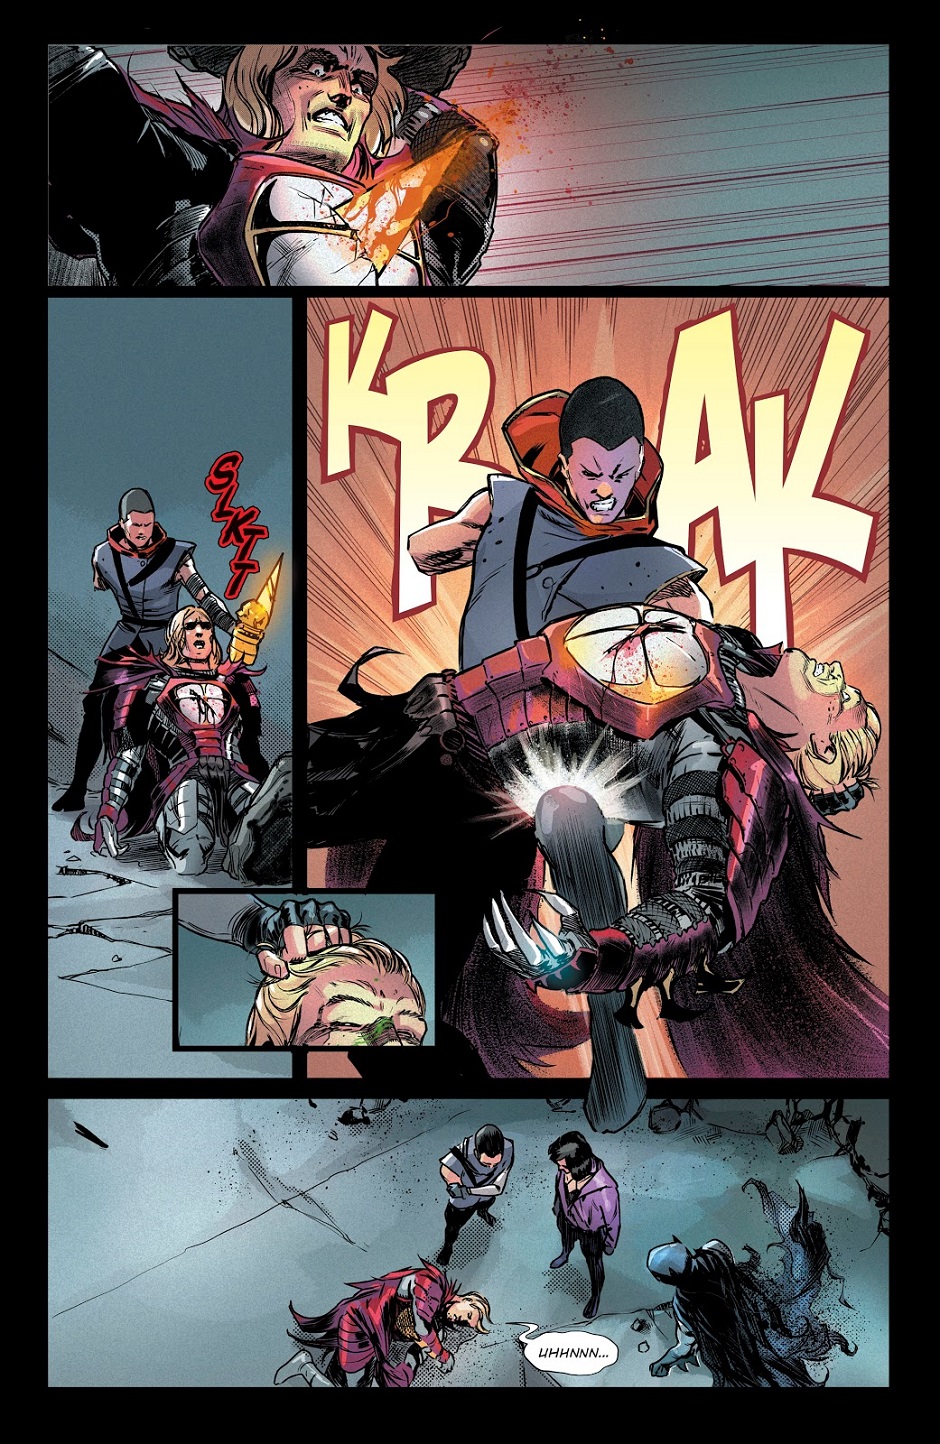 scans_daily | Tales from the Dark Multiverse: Batman - Knightfall #1